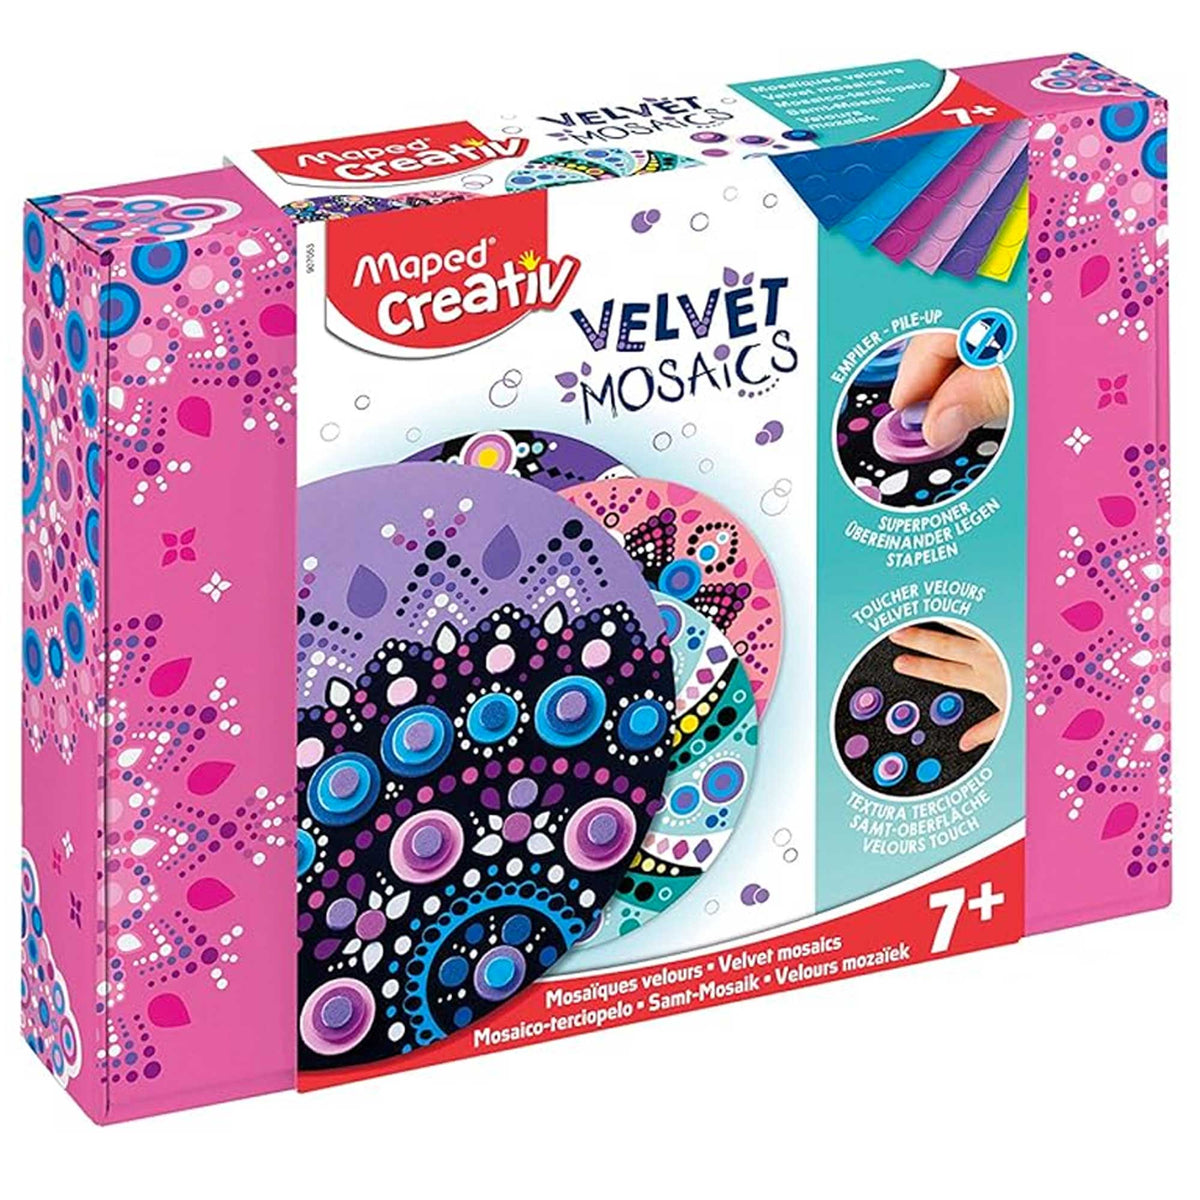 Maped Creativ Velvet Mosaics Pastel Colours Kit